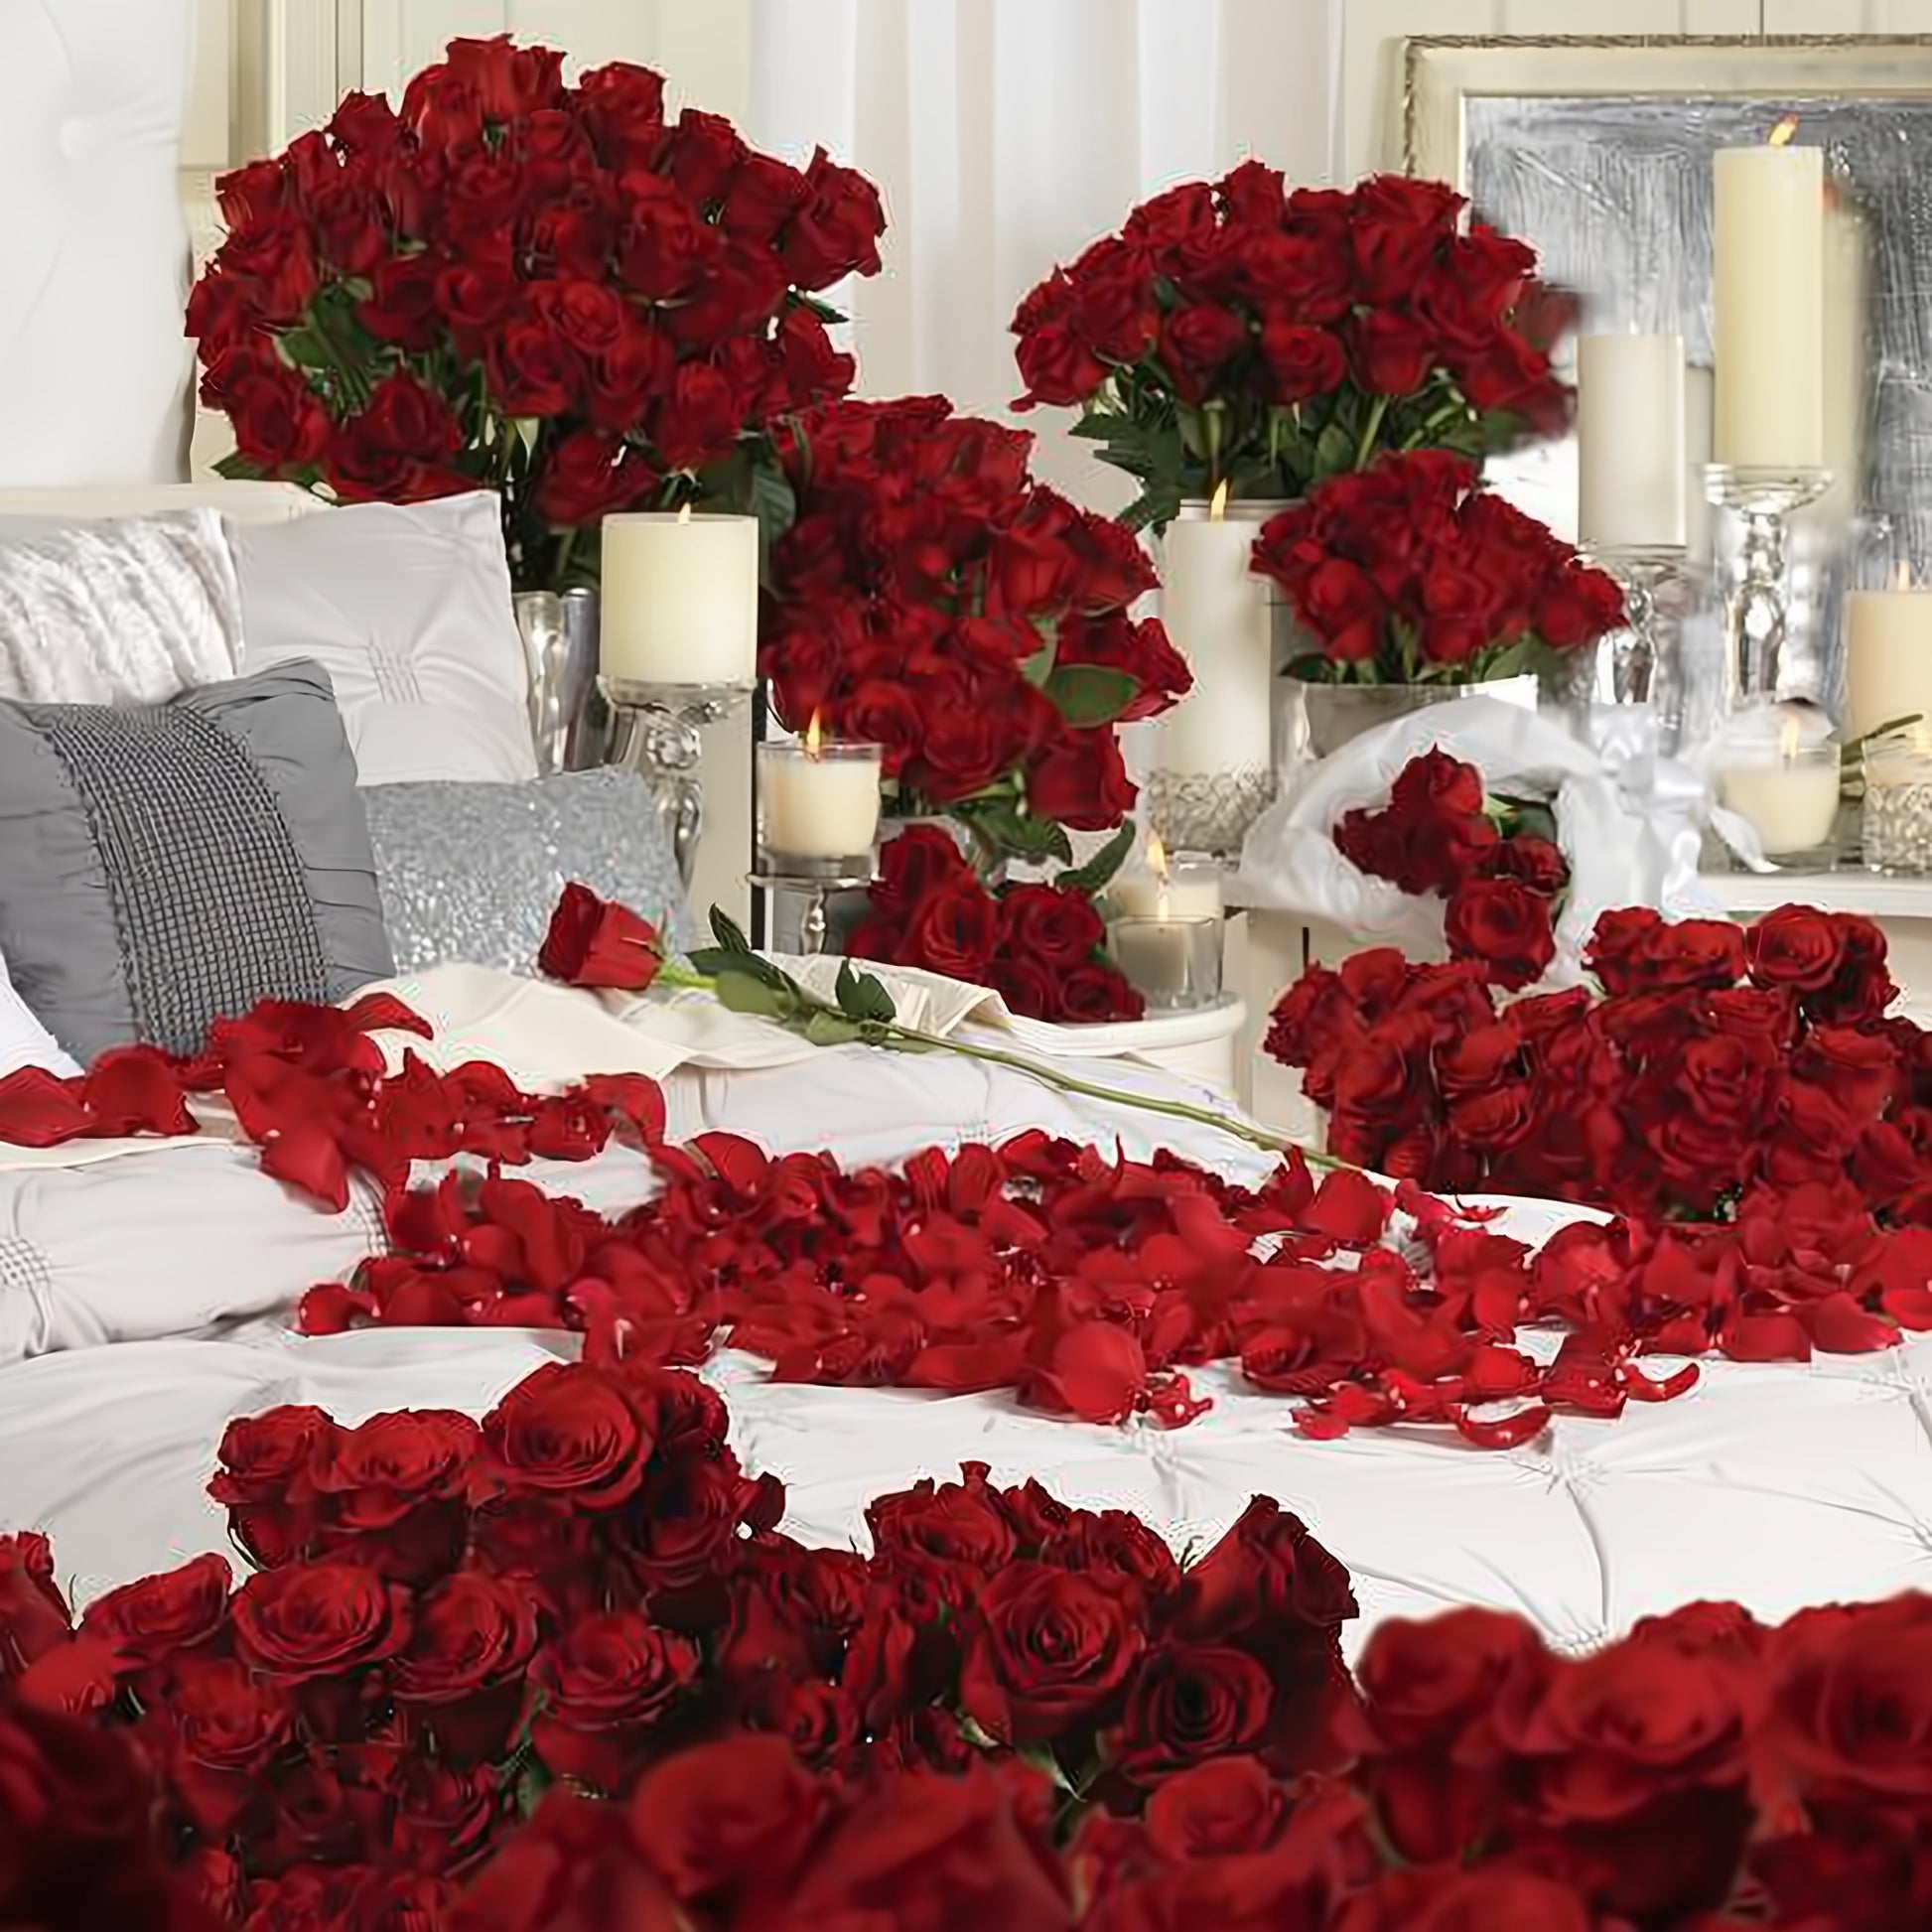 1,000 Long Stem Red Roses - Floral_Arrangement - Flower Delivery NYC